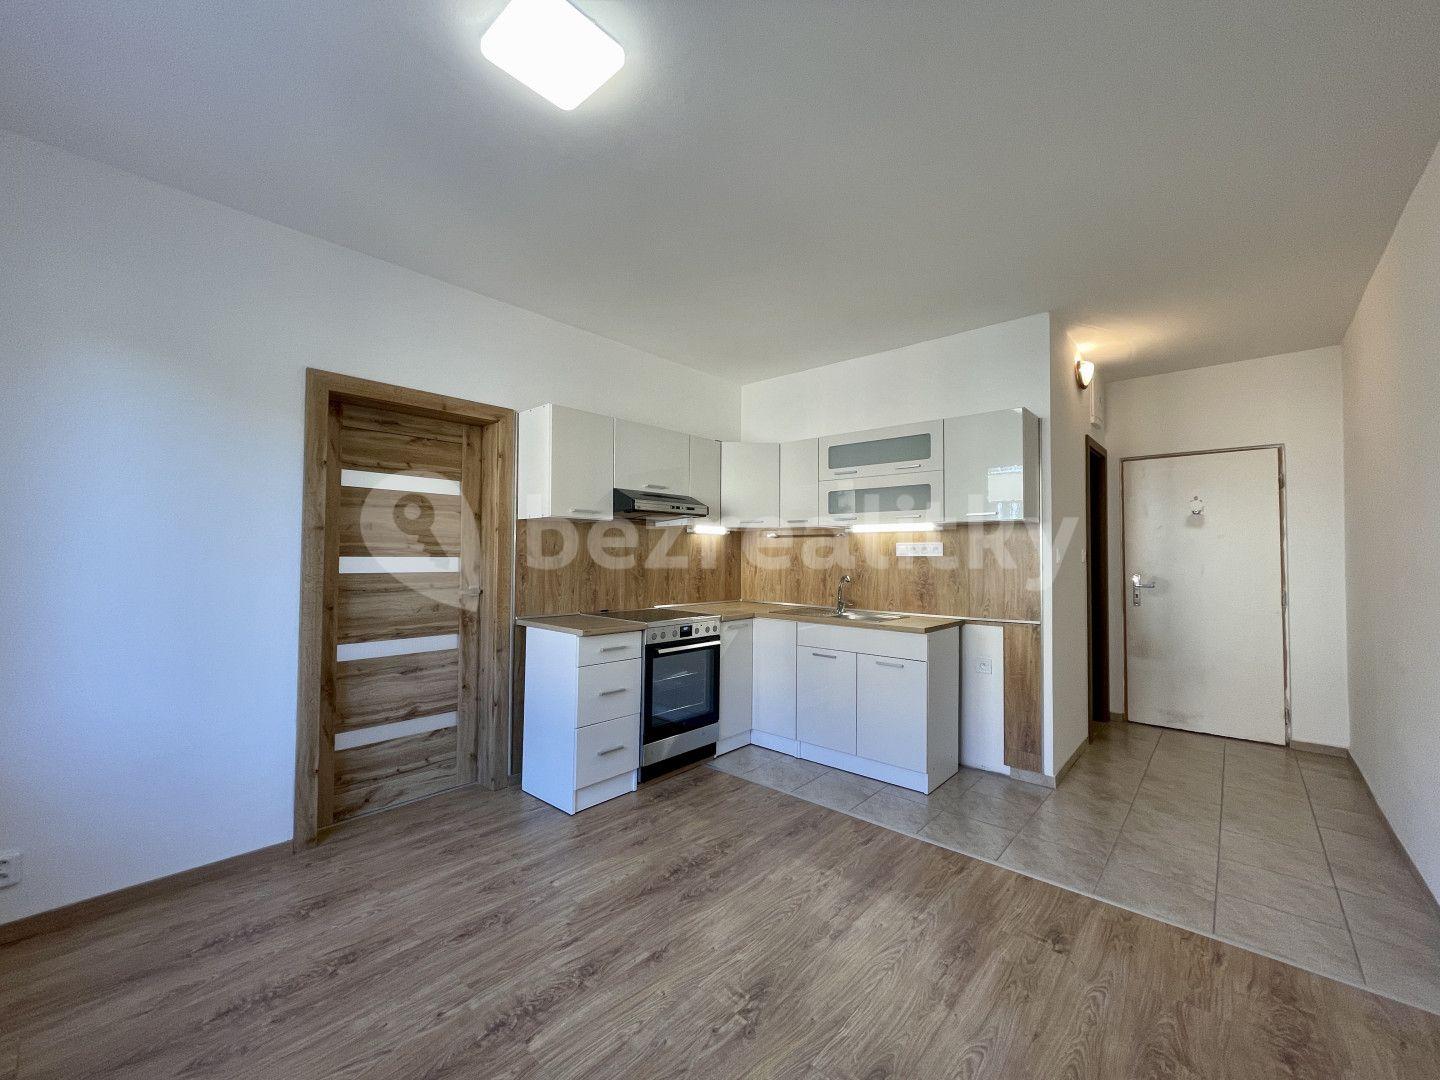 1 bedroom flat for sale, 36 m², Merklín, Karlovarský Region